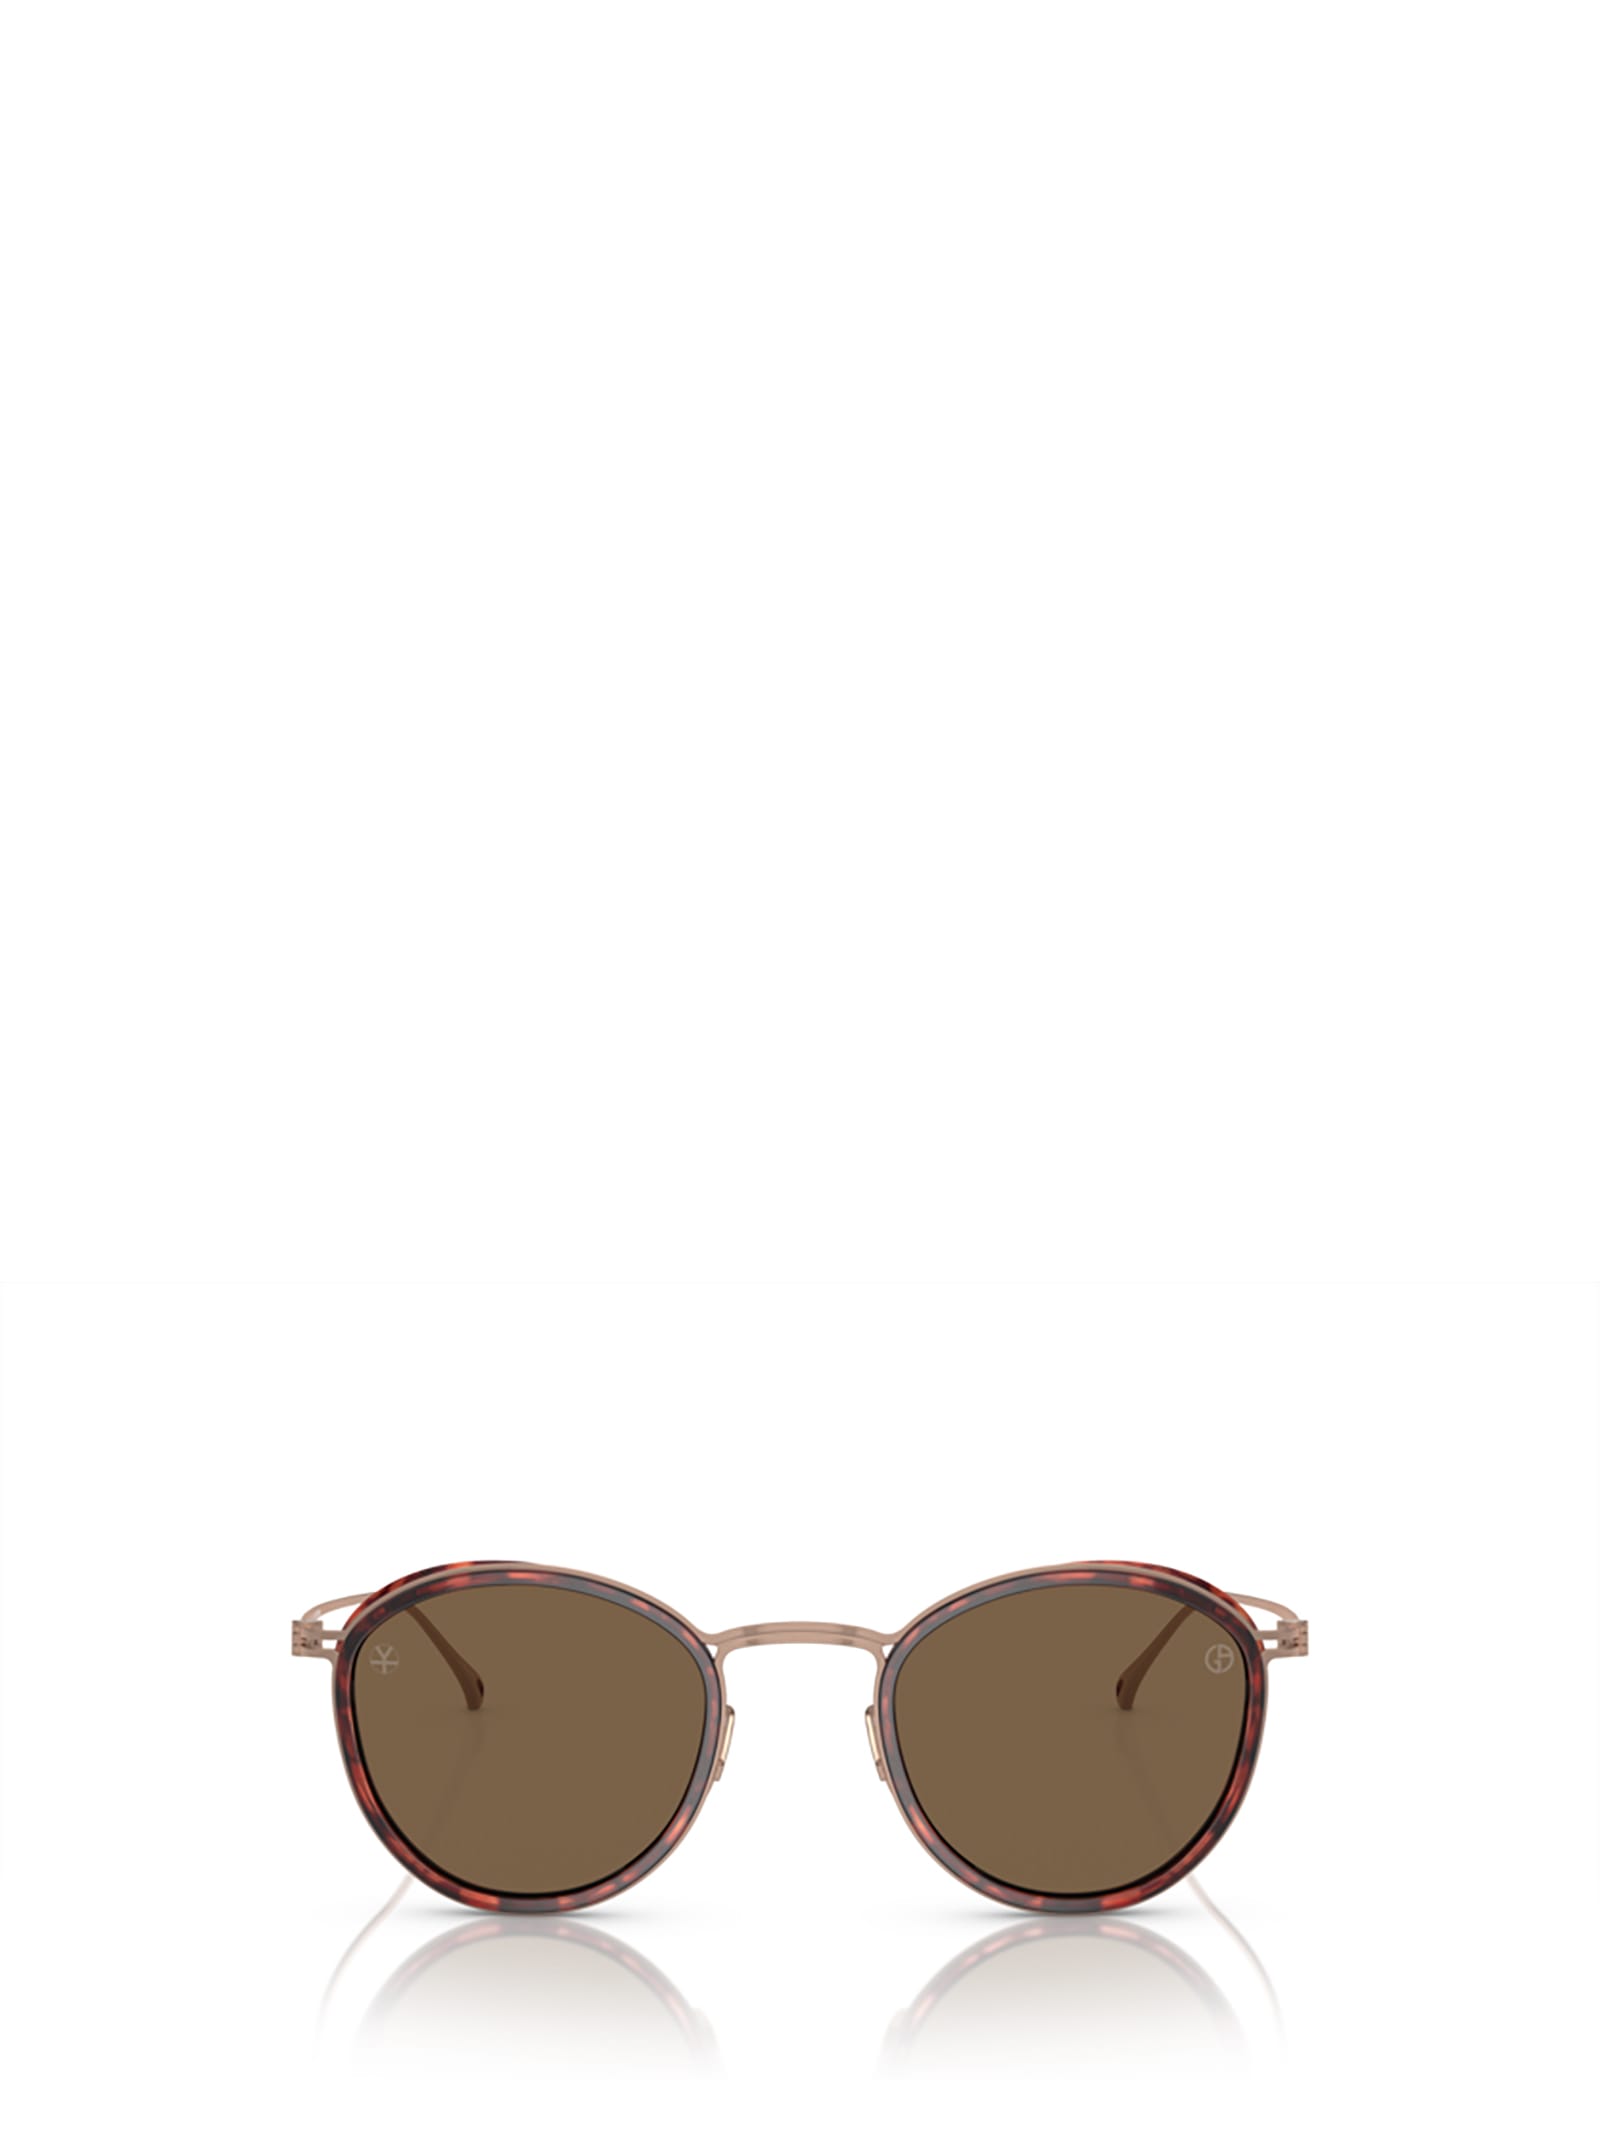 Giorgio Armani Ar6148t Shiny Havana Sunglasses